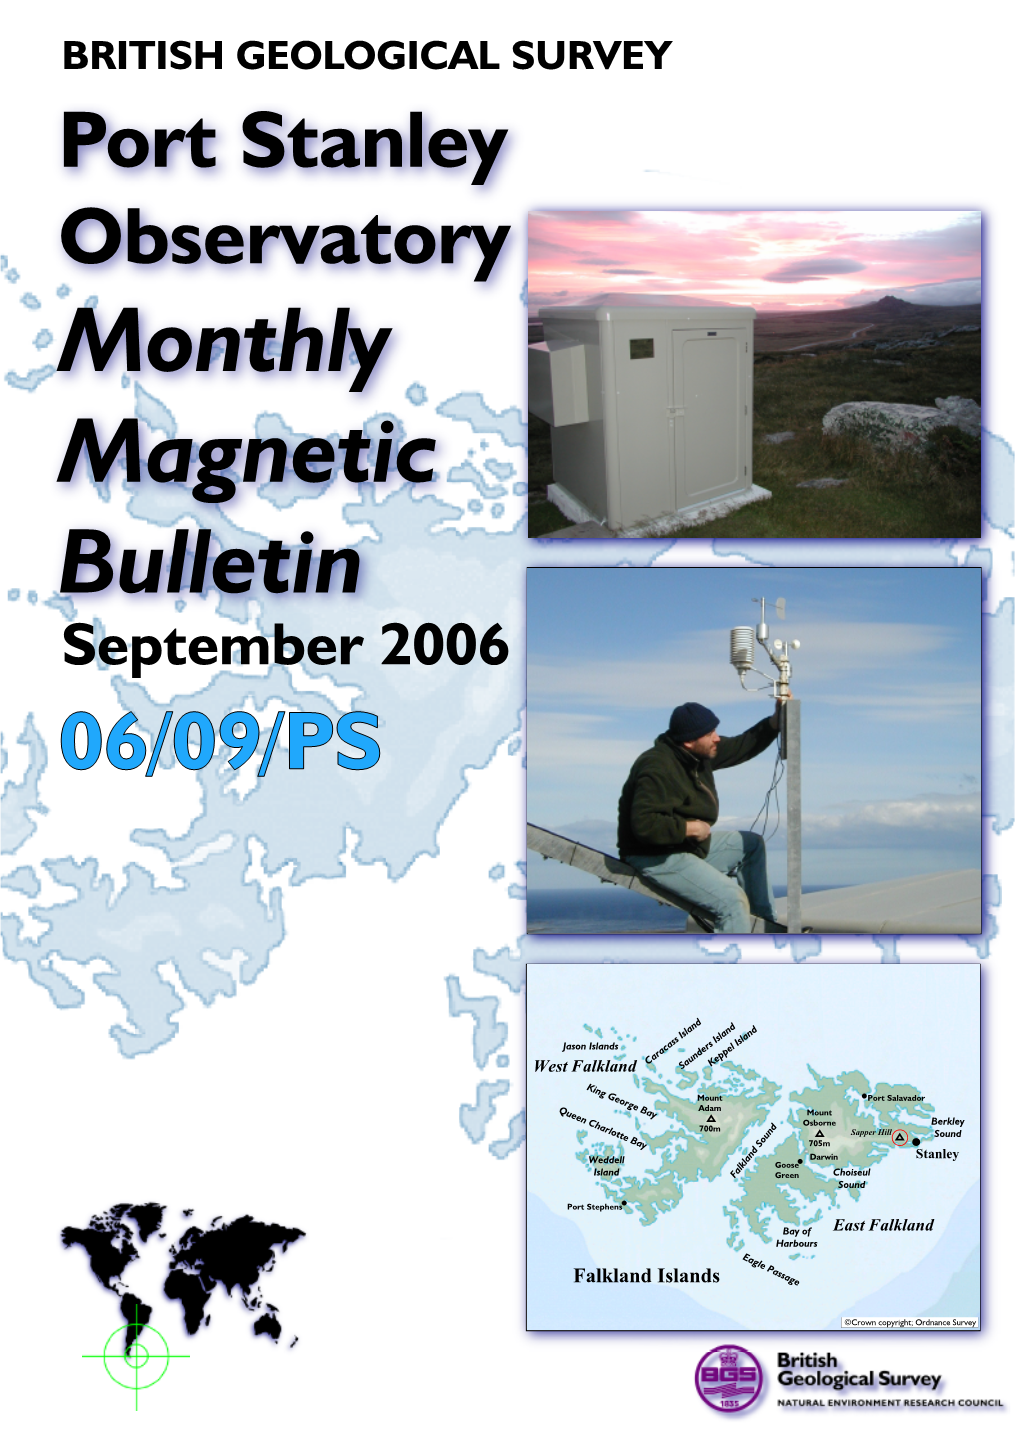 Port Stanley Observatory Monthly Magnetic Bulletin September 2006 06/09/PS